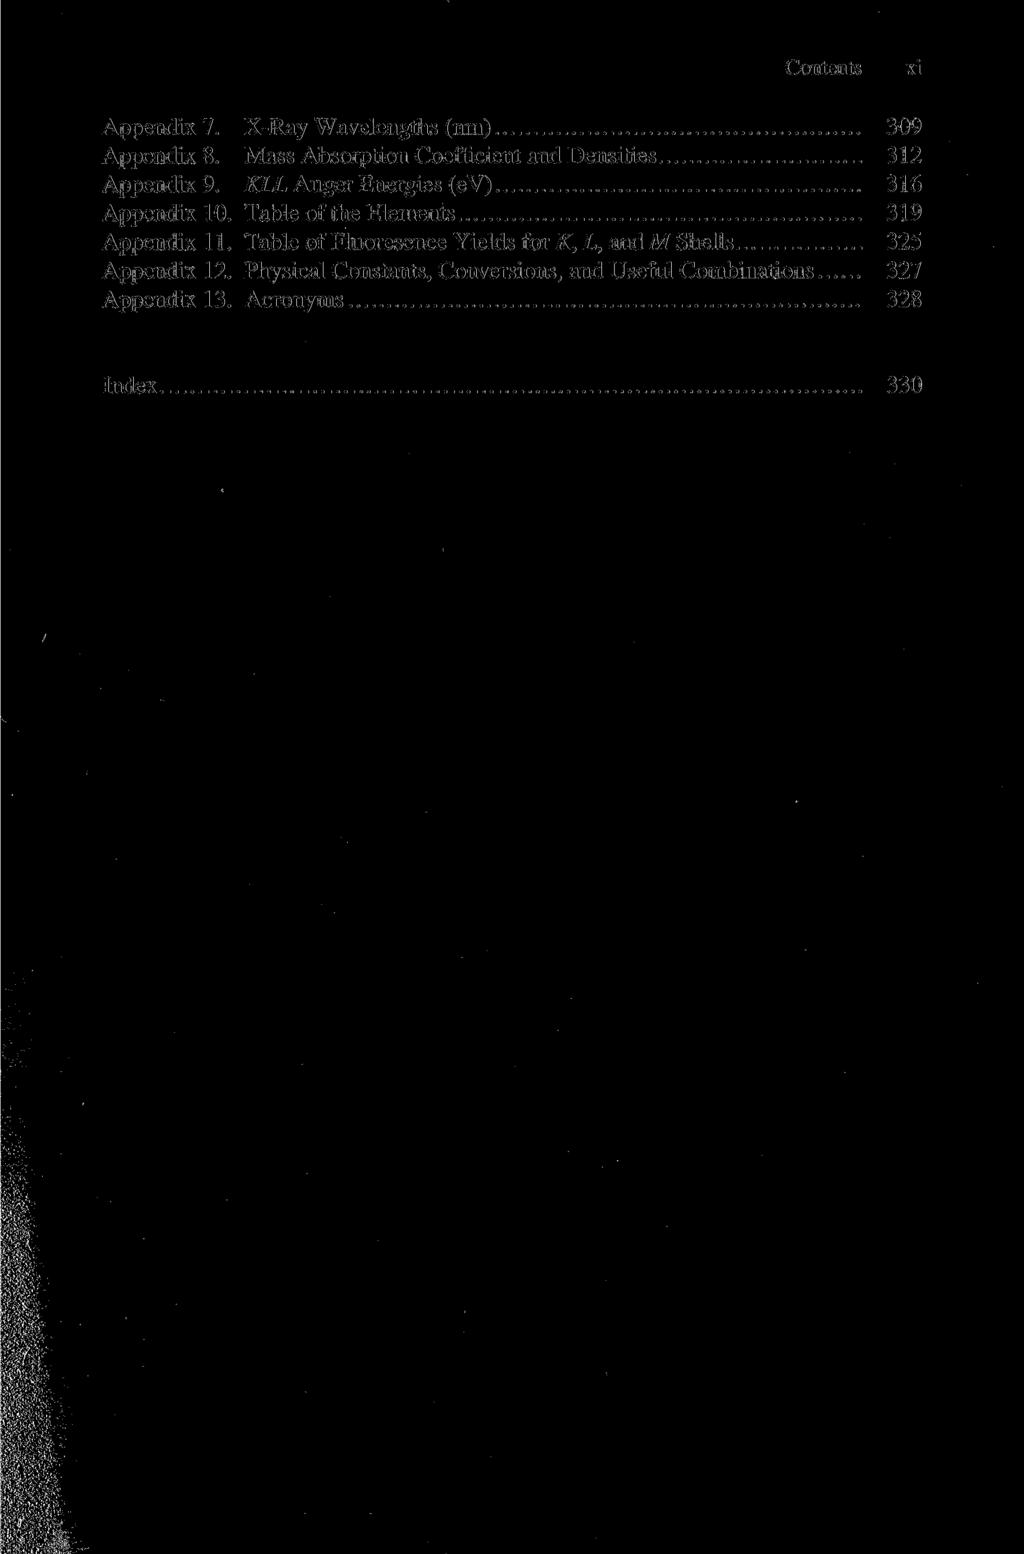 Contents xi Appendix 7. X-Ray Wavelengths (nm) 309 Appendix 8. Mass Absorption Coefficient and Densities 312 Appendix 9. KLL Auger Energies (ev) 316 Appendix 10.